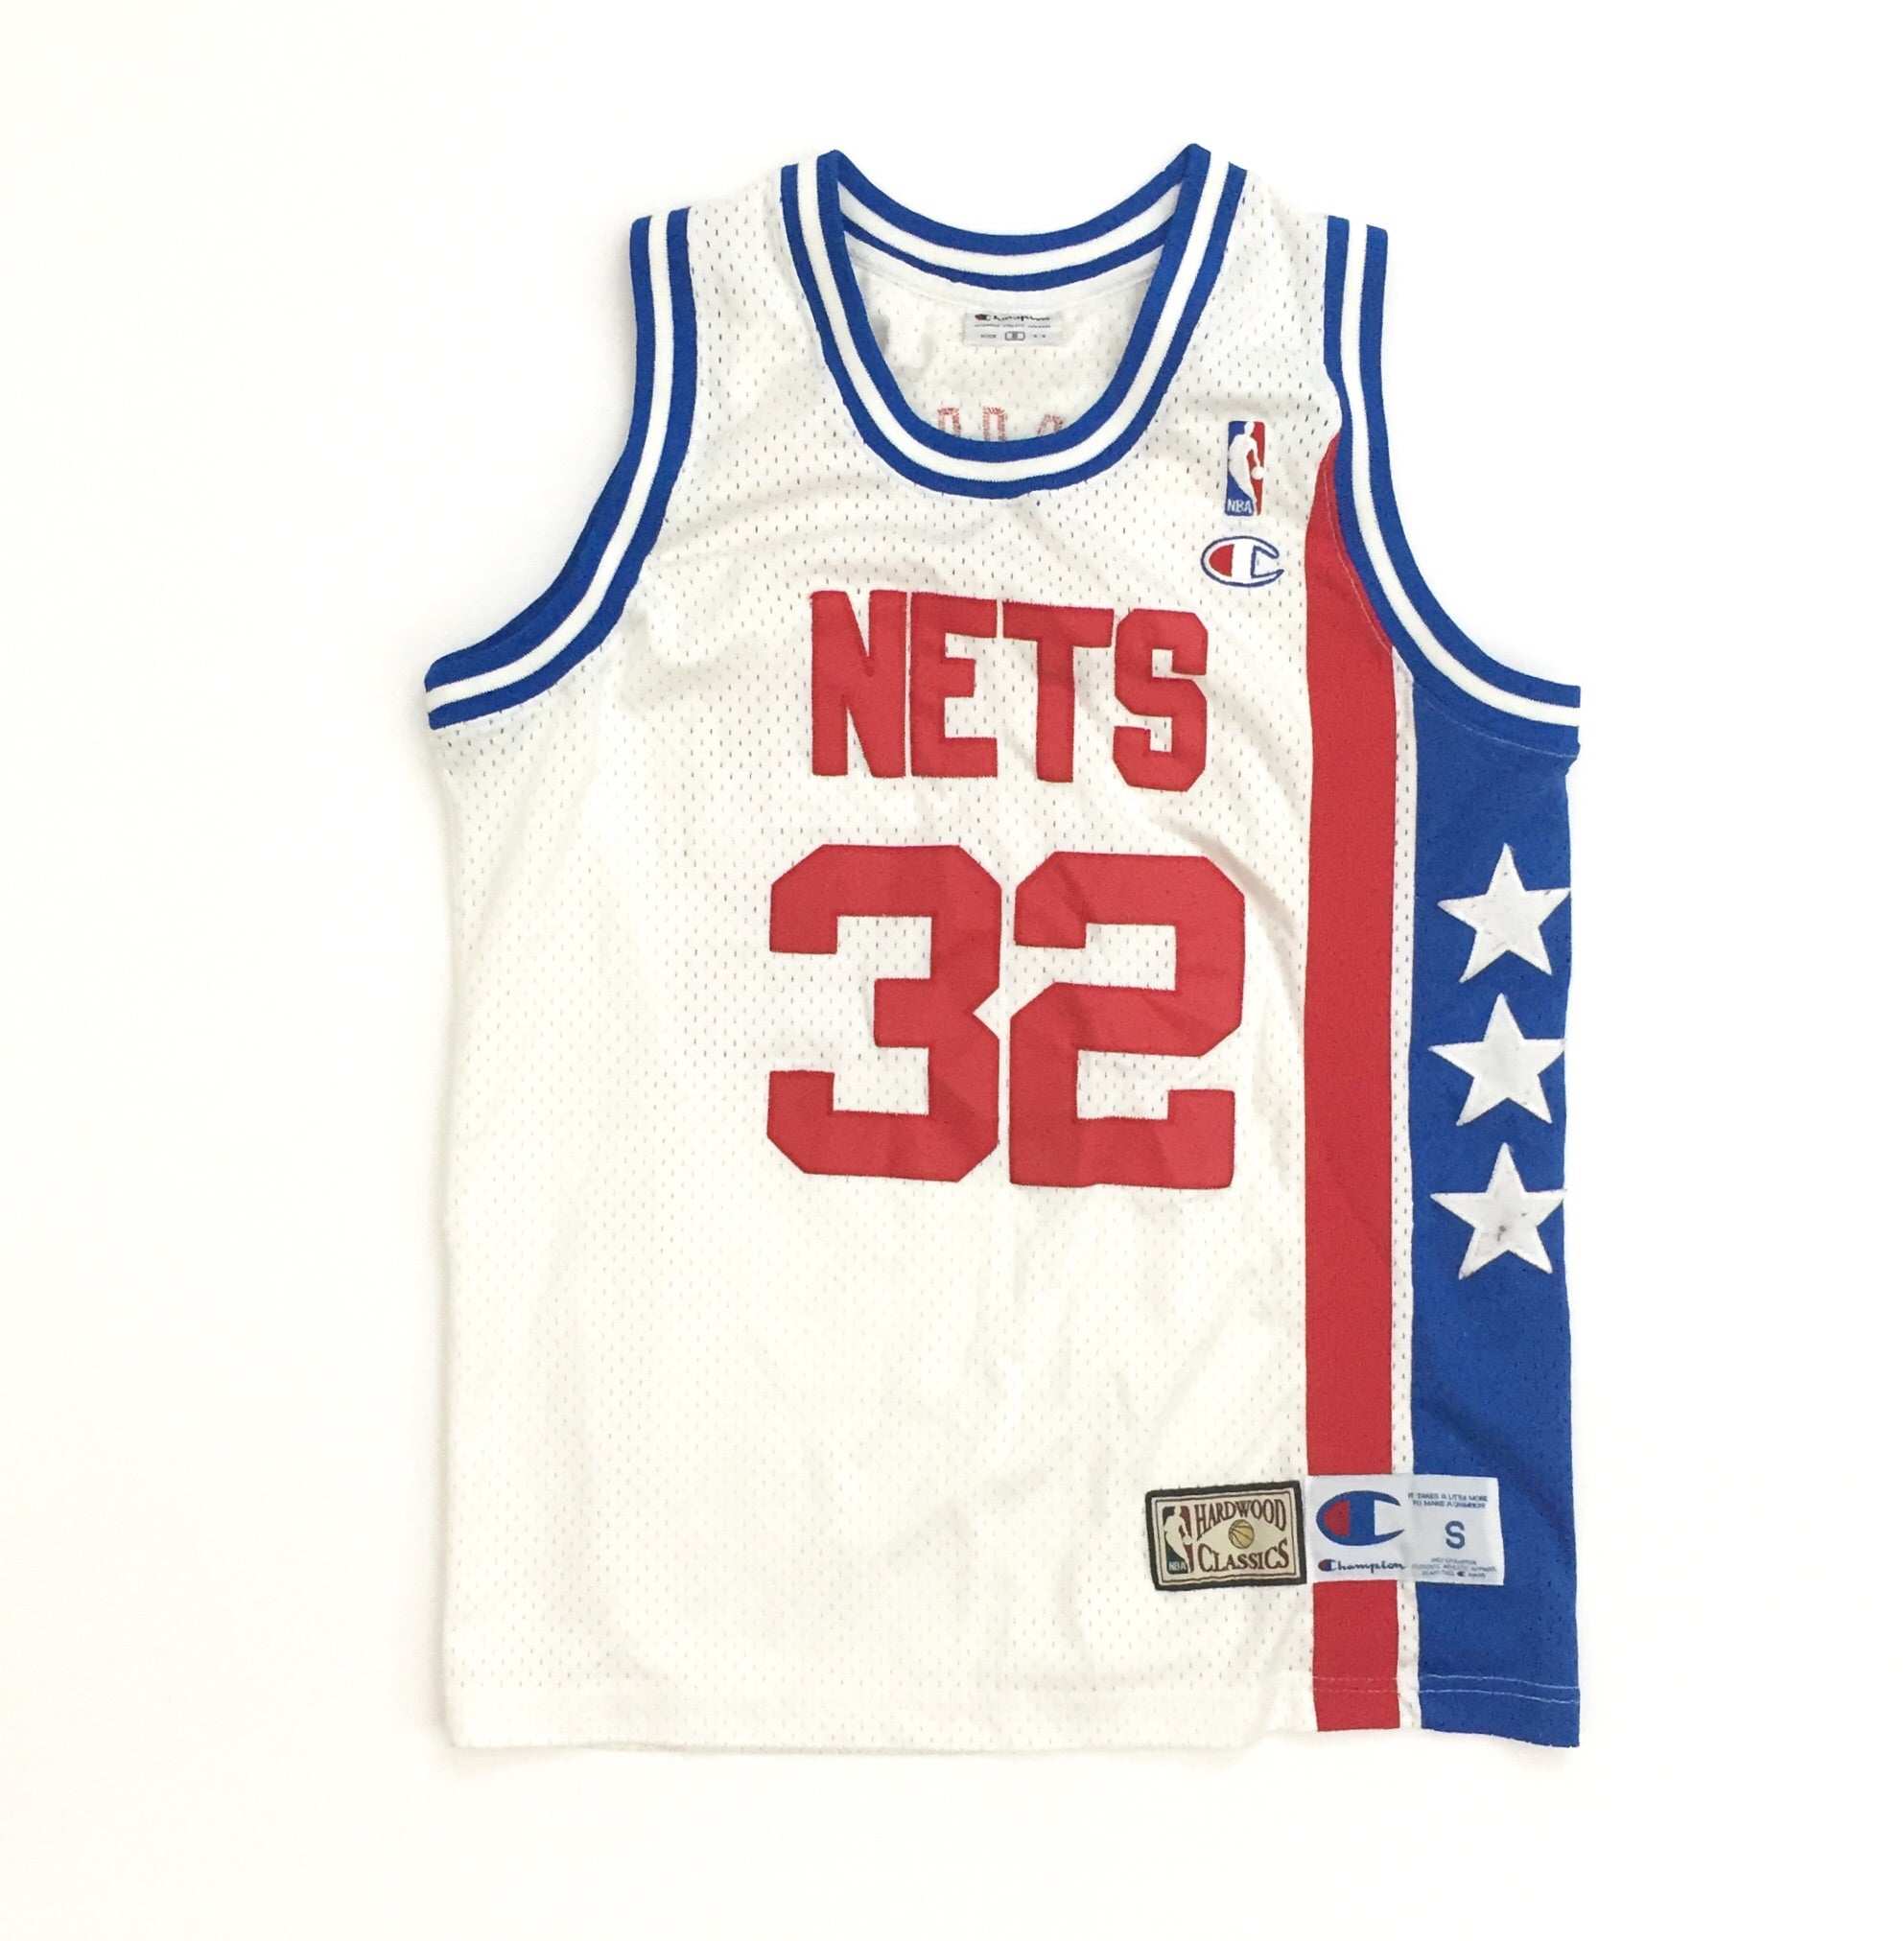 NBA Jersey Database, New York Nets 1976-1977 Record: 22-60 (27%)